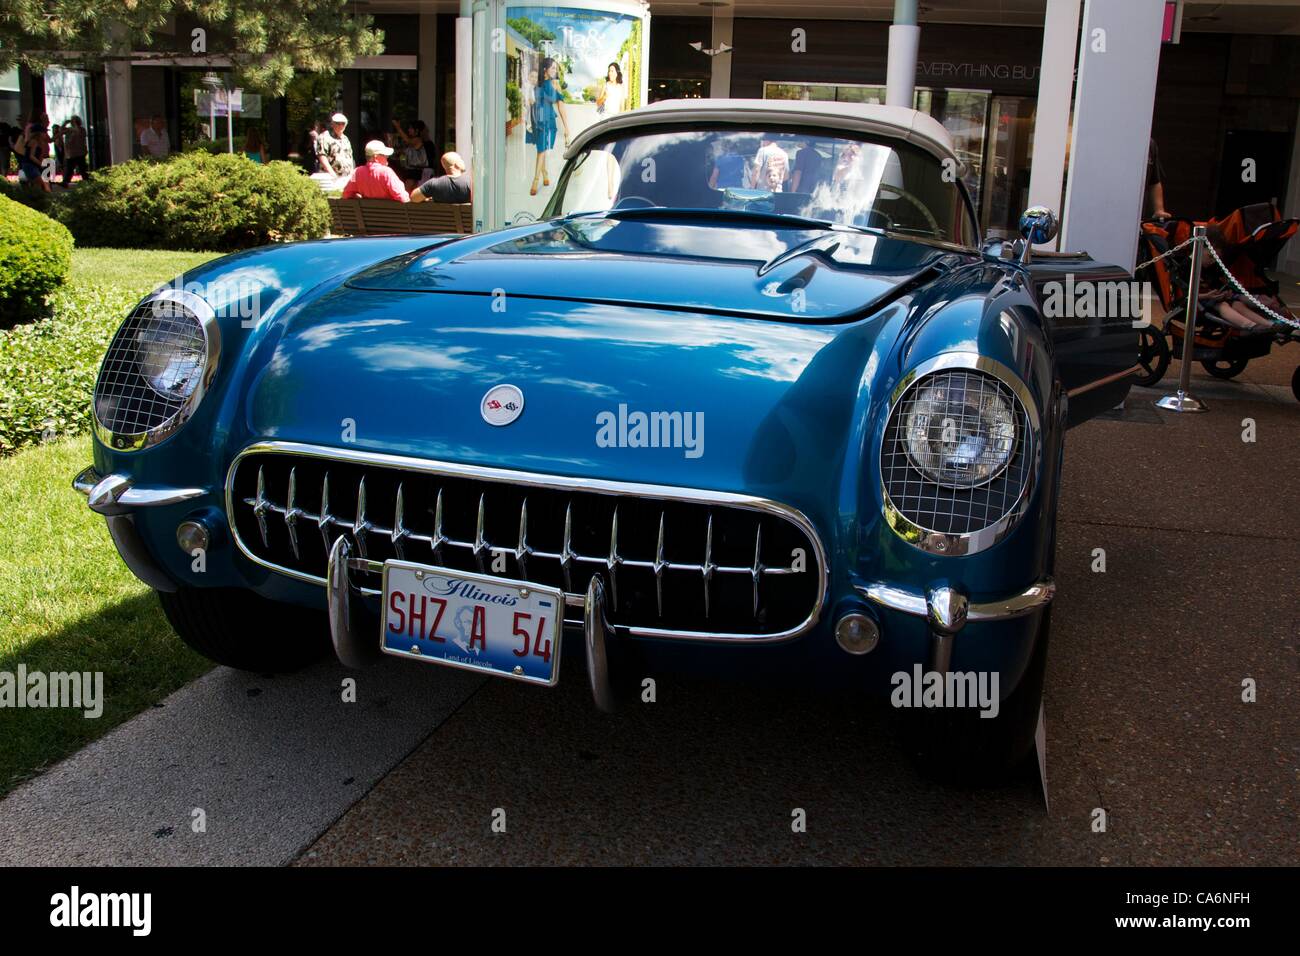 17, June, 2012, Oak Brook, Illinois, USA. A 1954 Chevrolet Corvette on